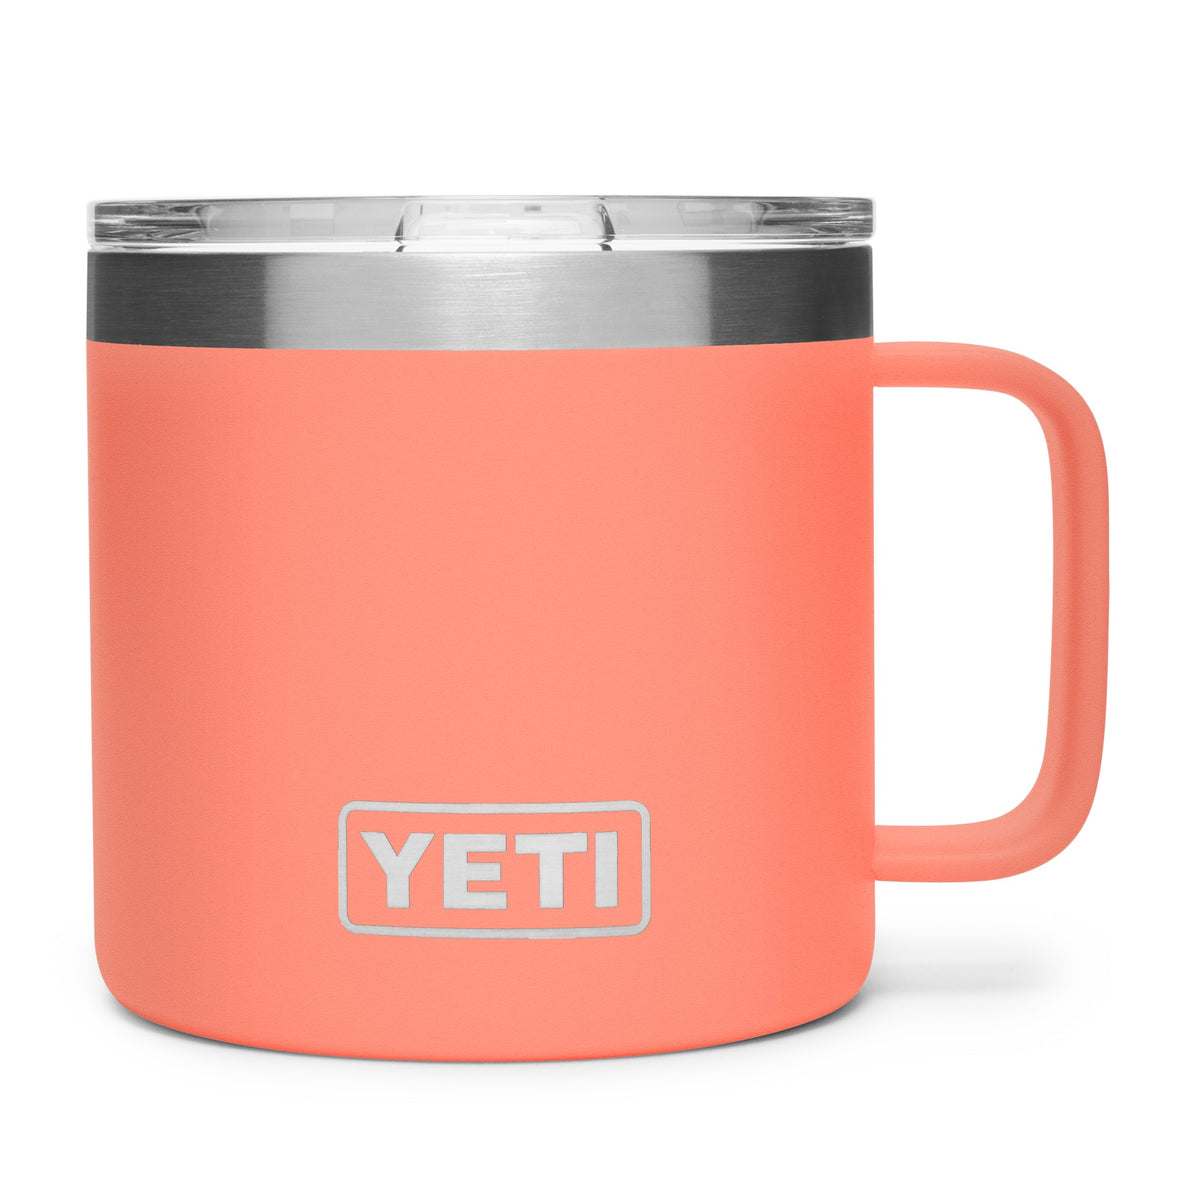 New Yeti 24 oz. Rambler Mug comparison with regular mug 